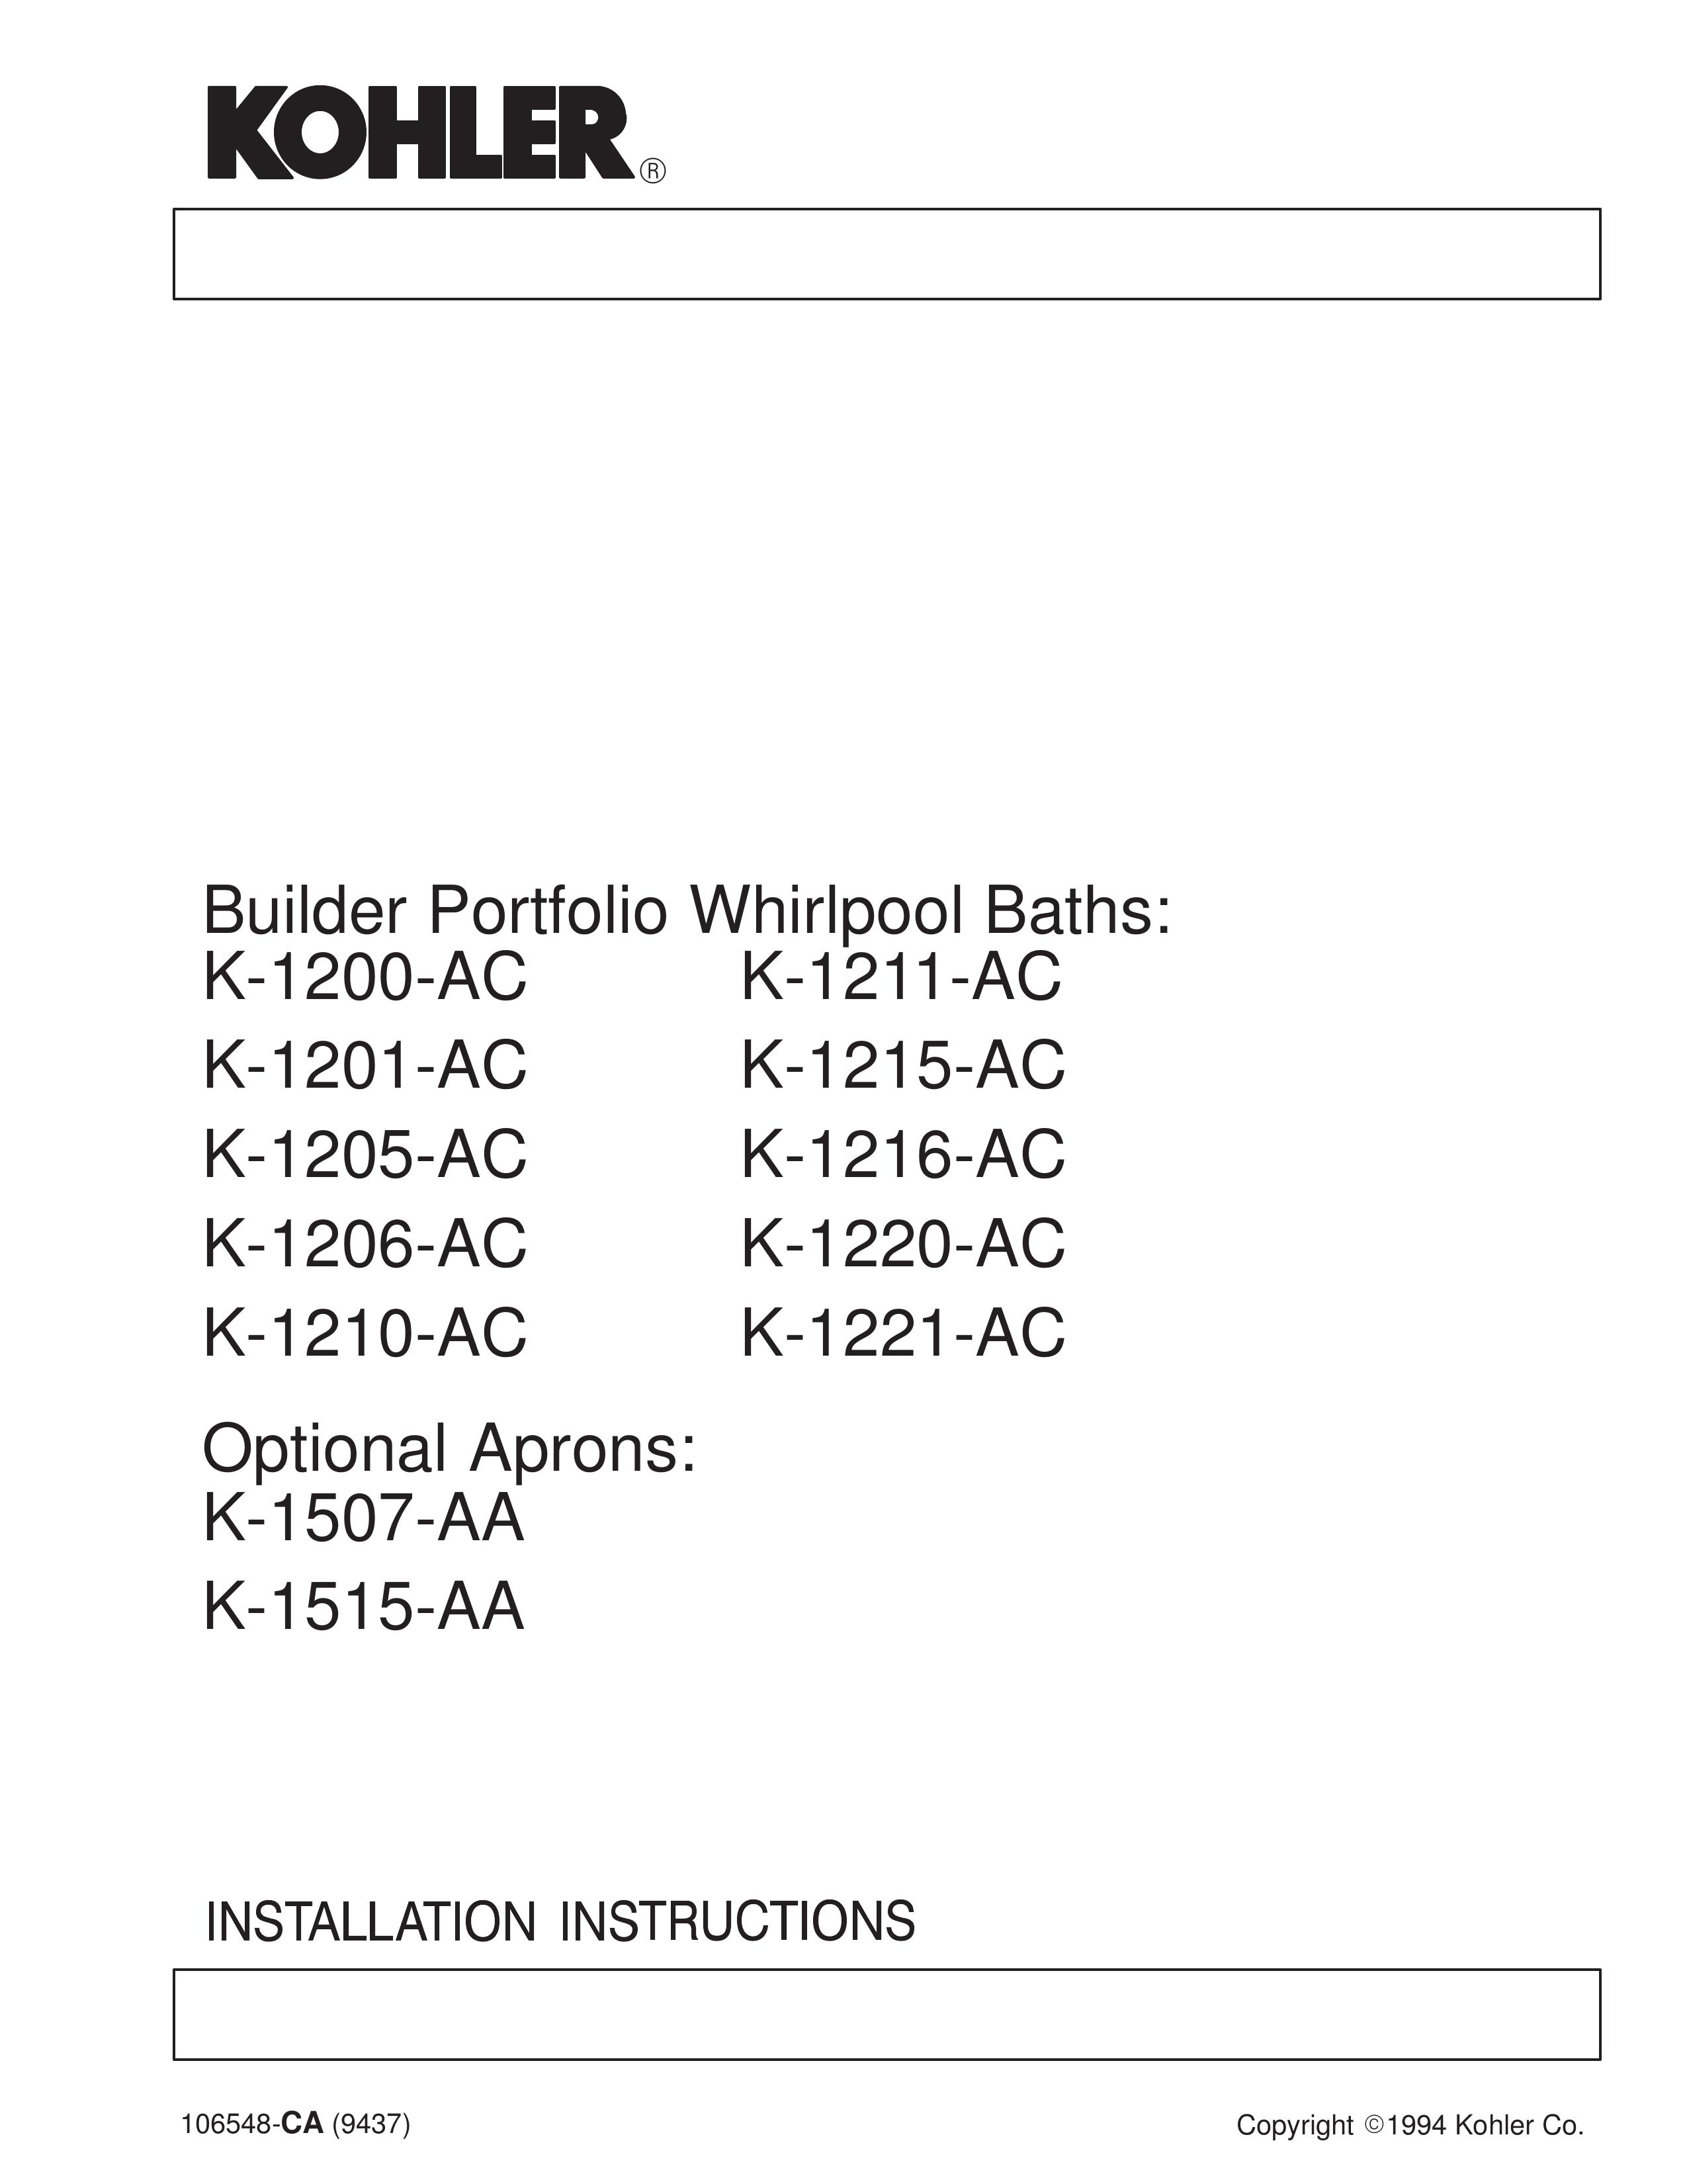 Kohler K-1221-AC Bathroom Aids User Manual